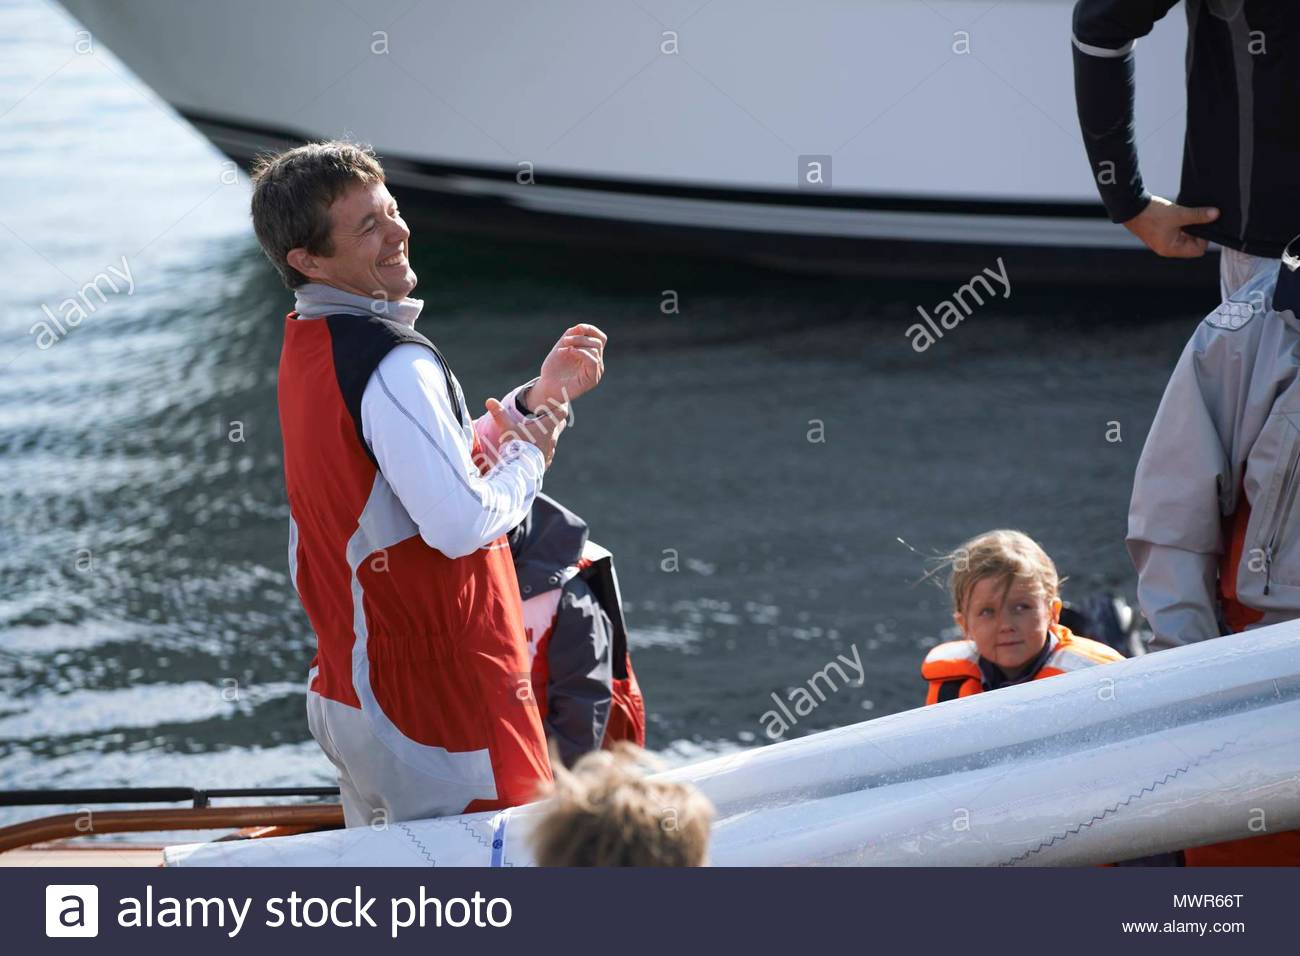 crown-prince-frederik-and-princess-isabella-crown-prince-frederik-sailing-with-children-prince-christian-and-princess-isabella-during-the-nordic-championship-in-dragon-sailing-at-baastad-sweden-MWR66T.jpg